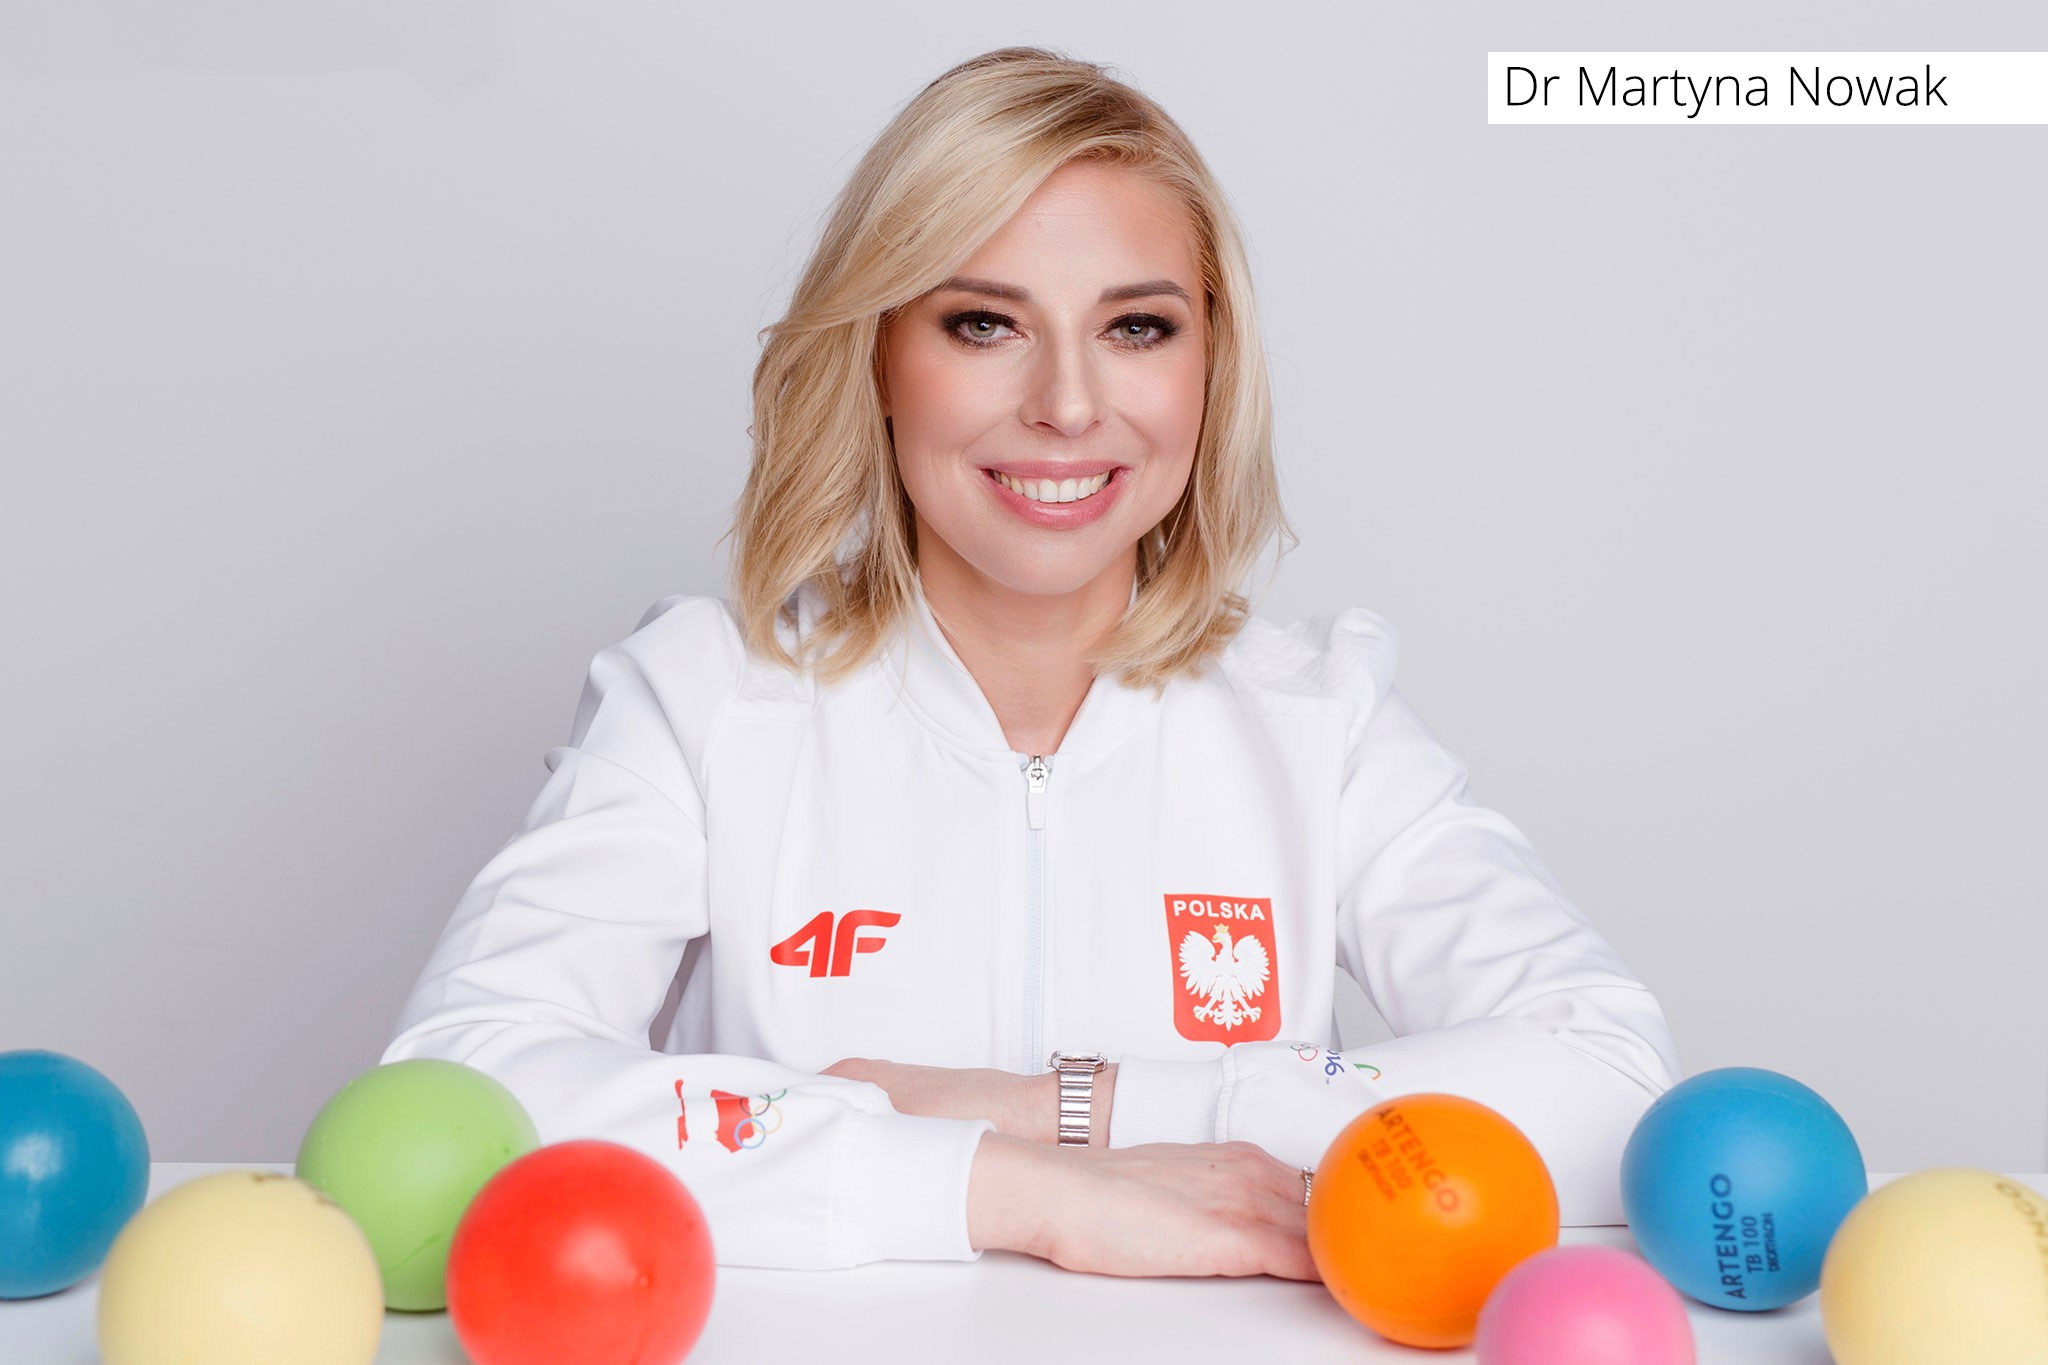 Dr Martyna Nowak